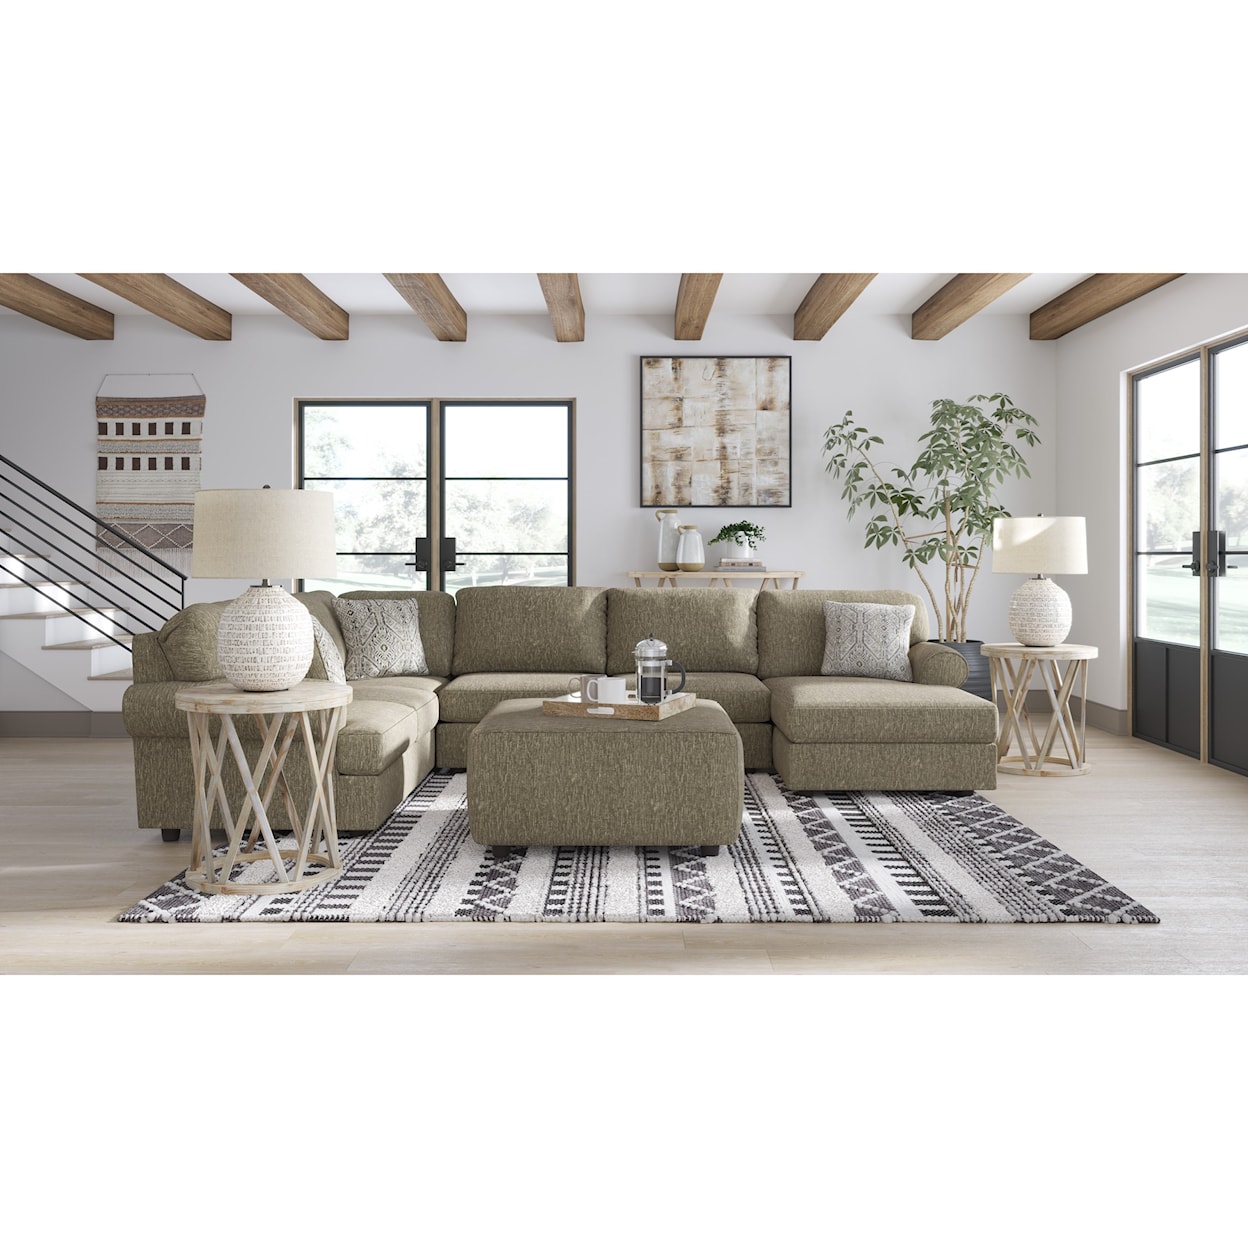 Ashley Furniture Signature Design Hoylake Living Room Group